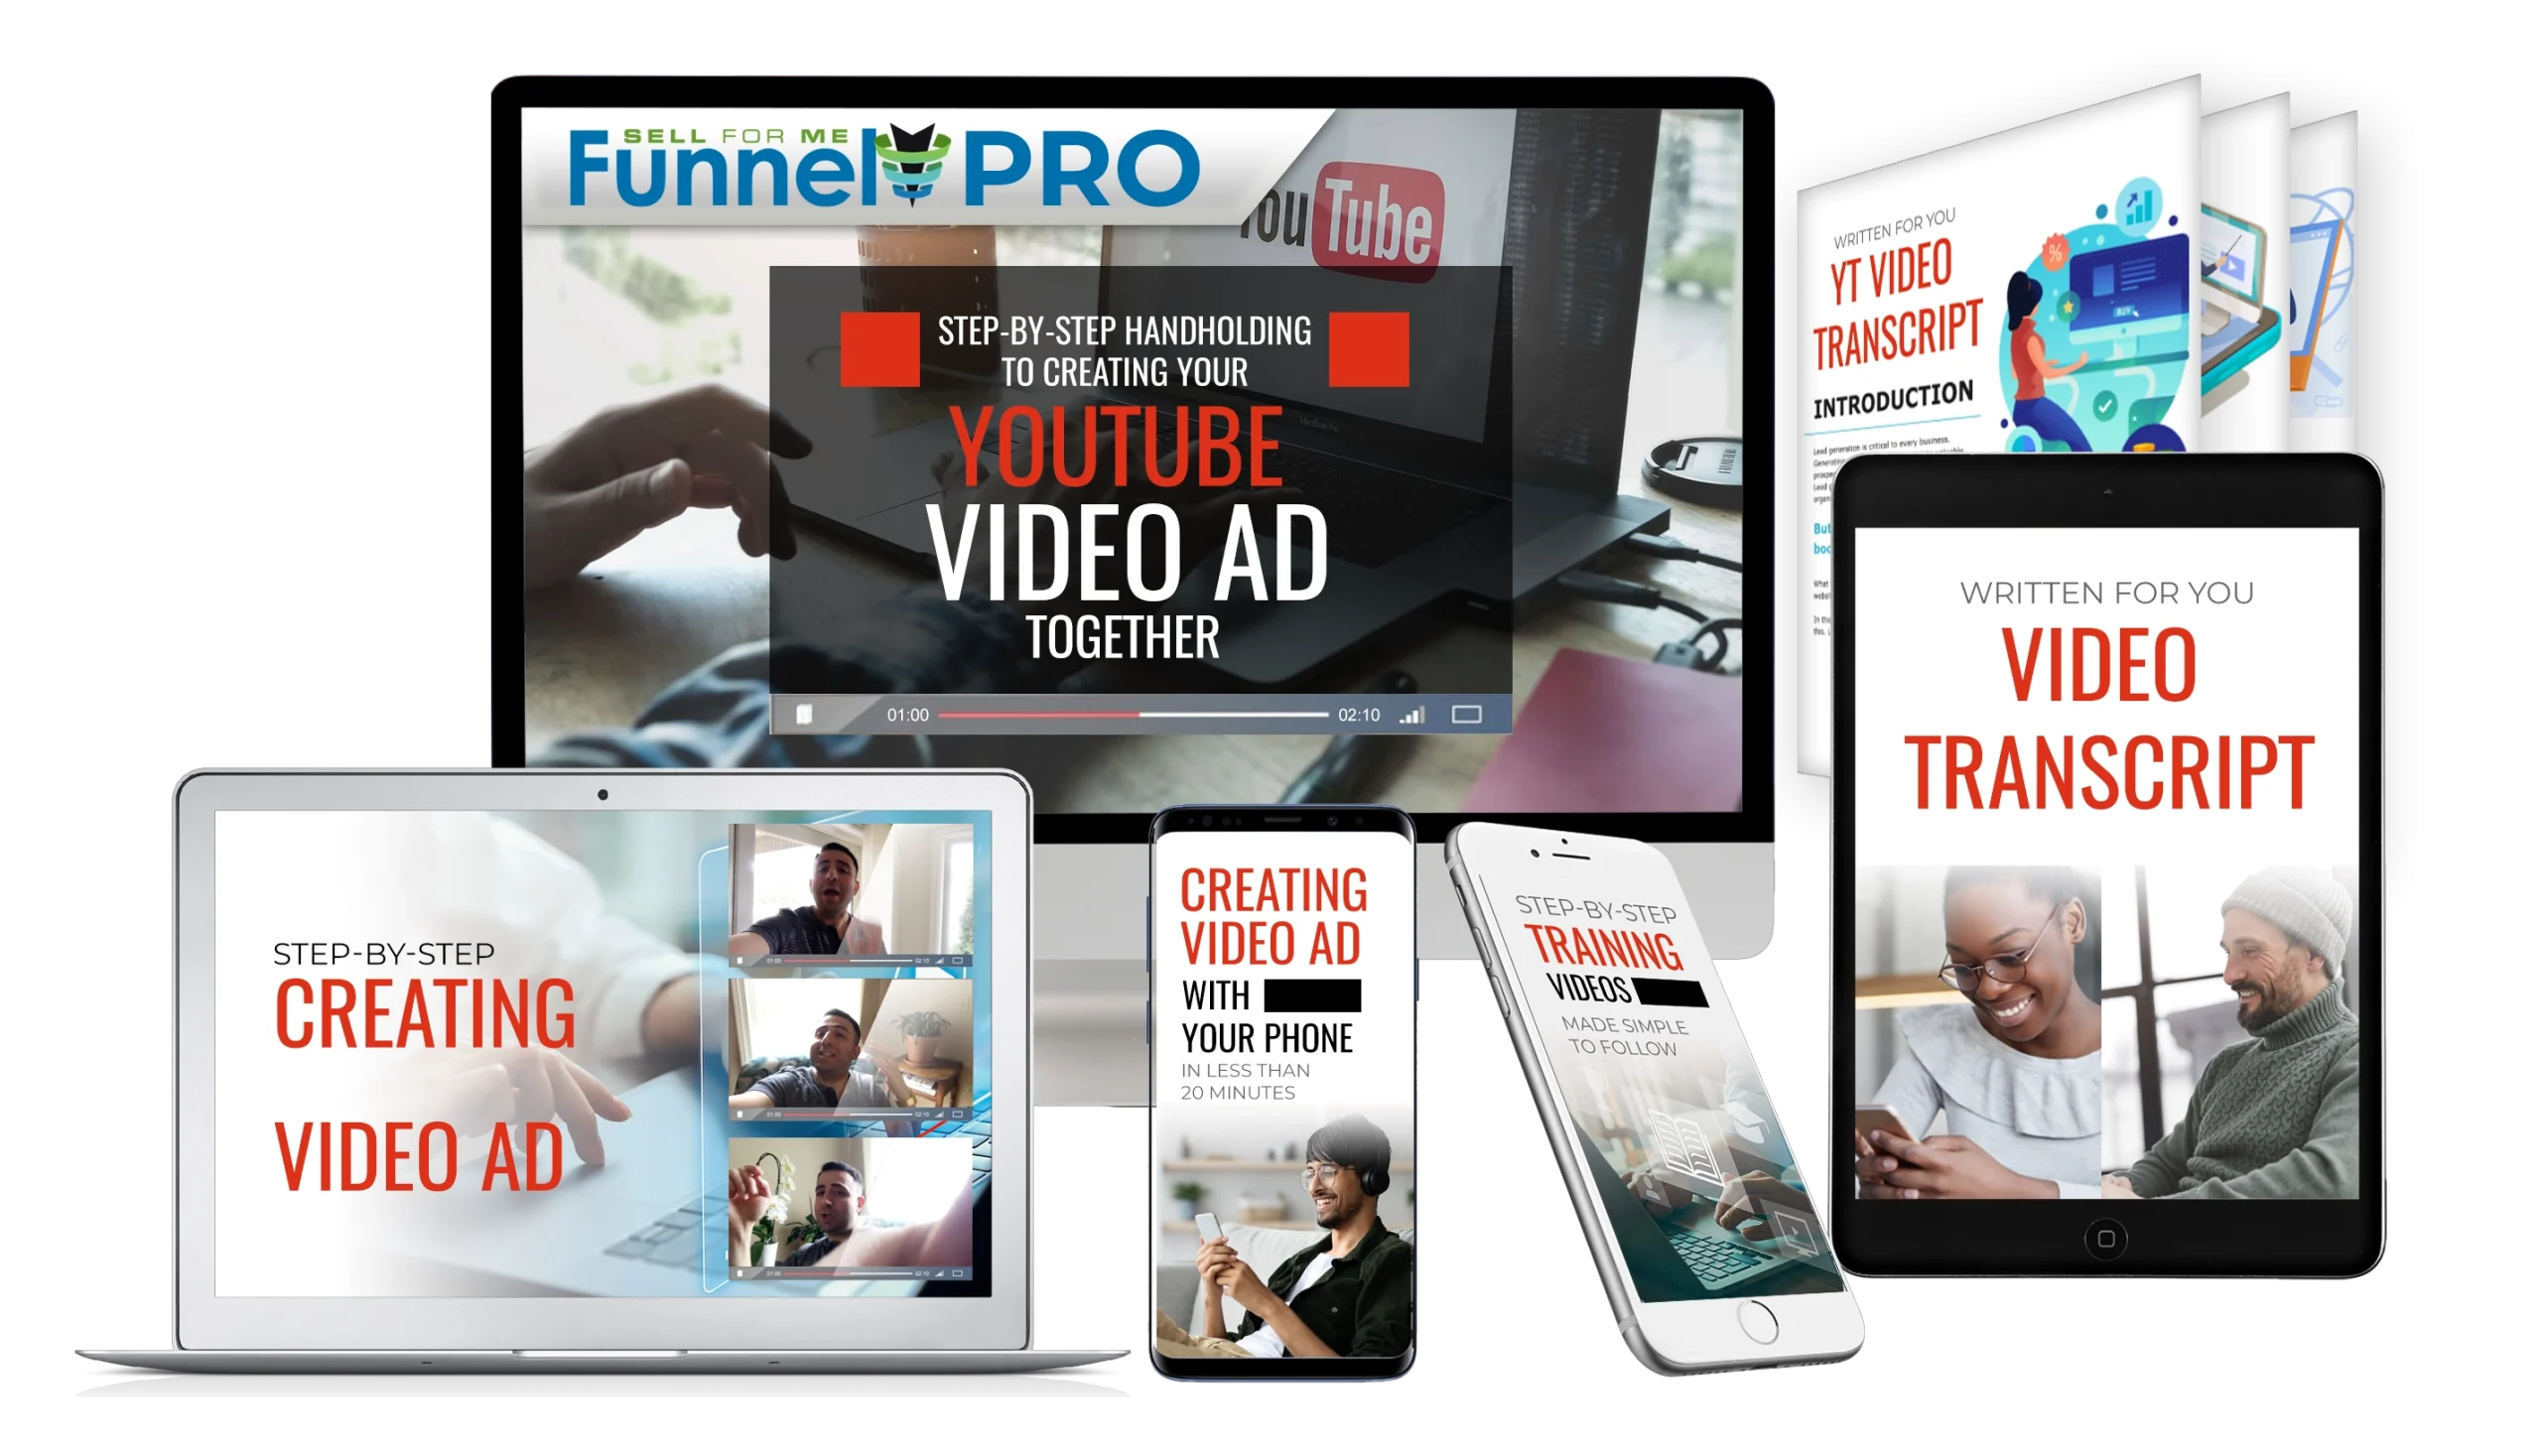 SFMF PRO - YouTube Video Ad Training